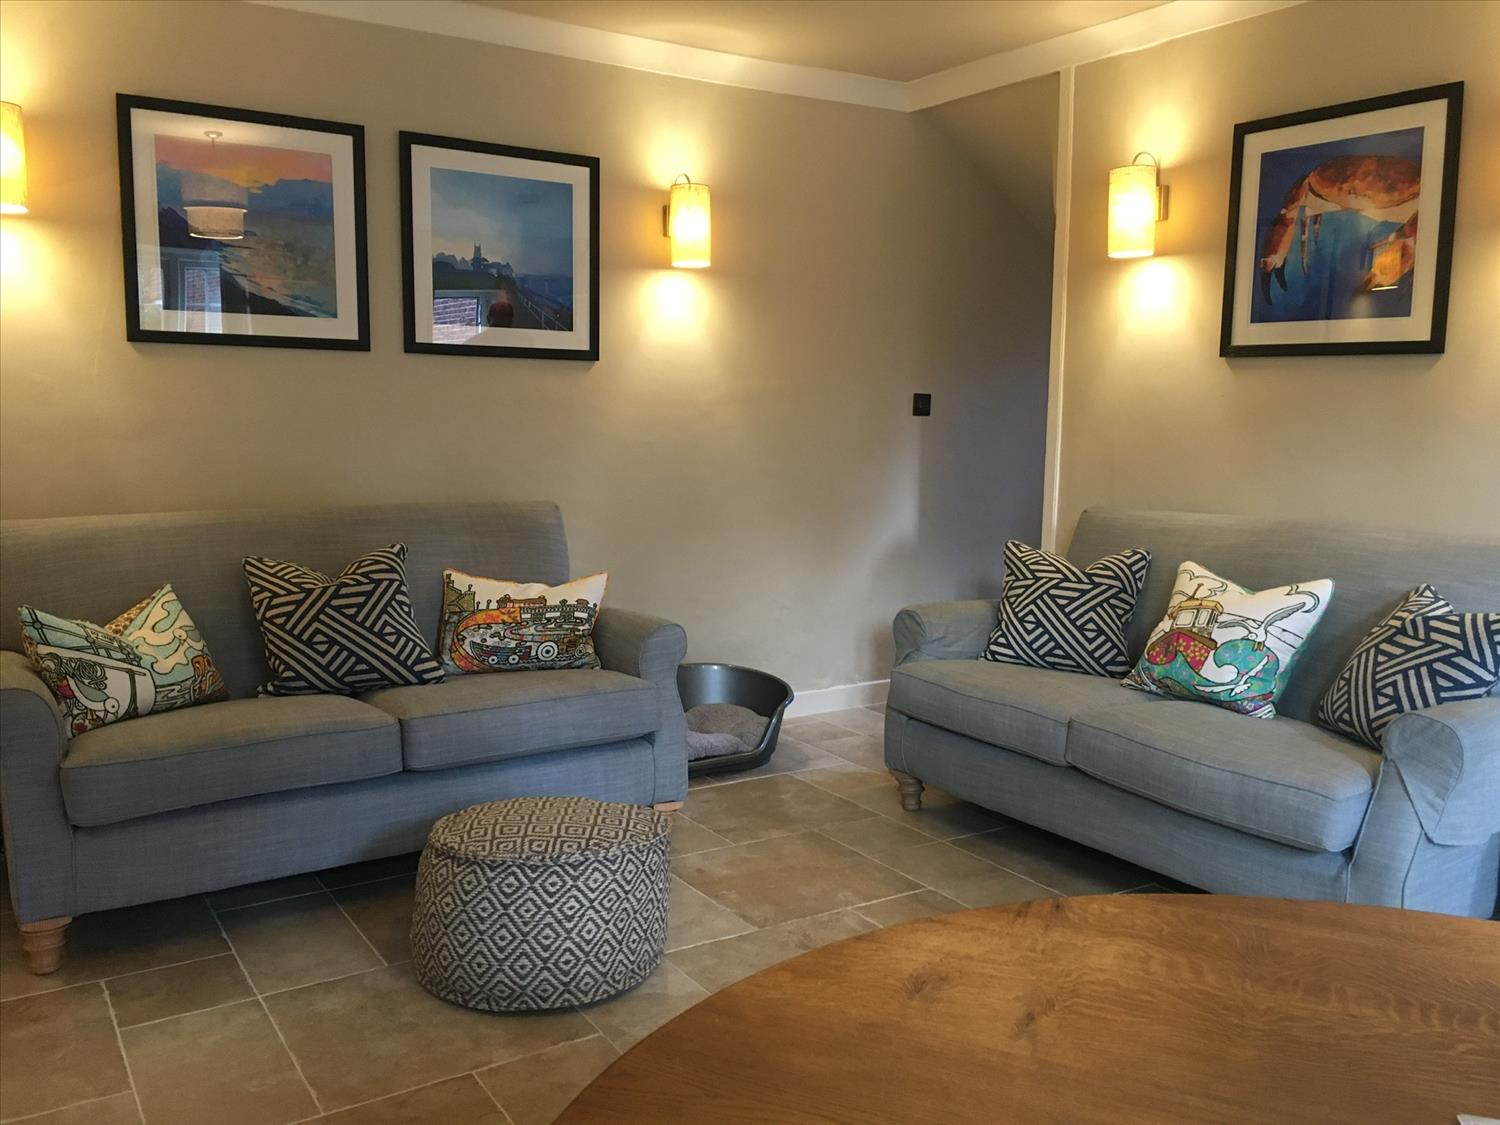 Sofas in living room 9 Melinda Cottage East Runton @NorfolkCoastline